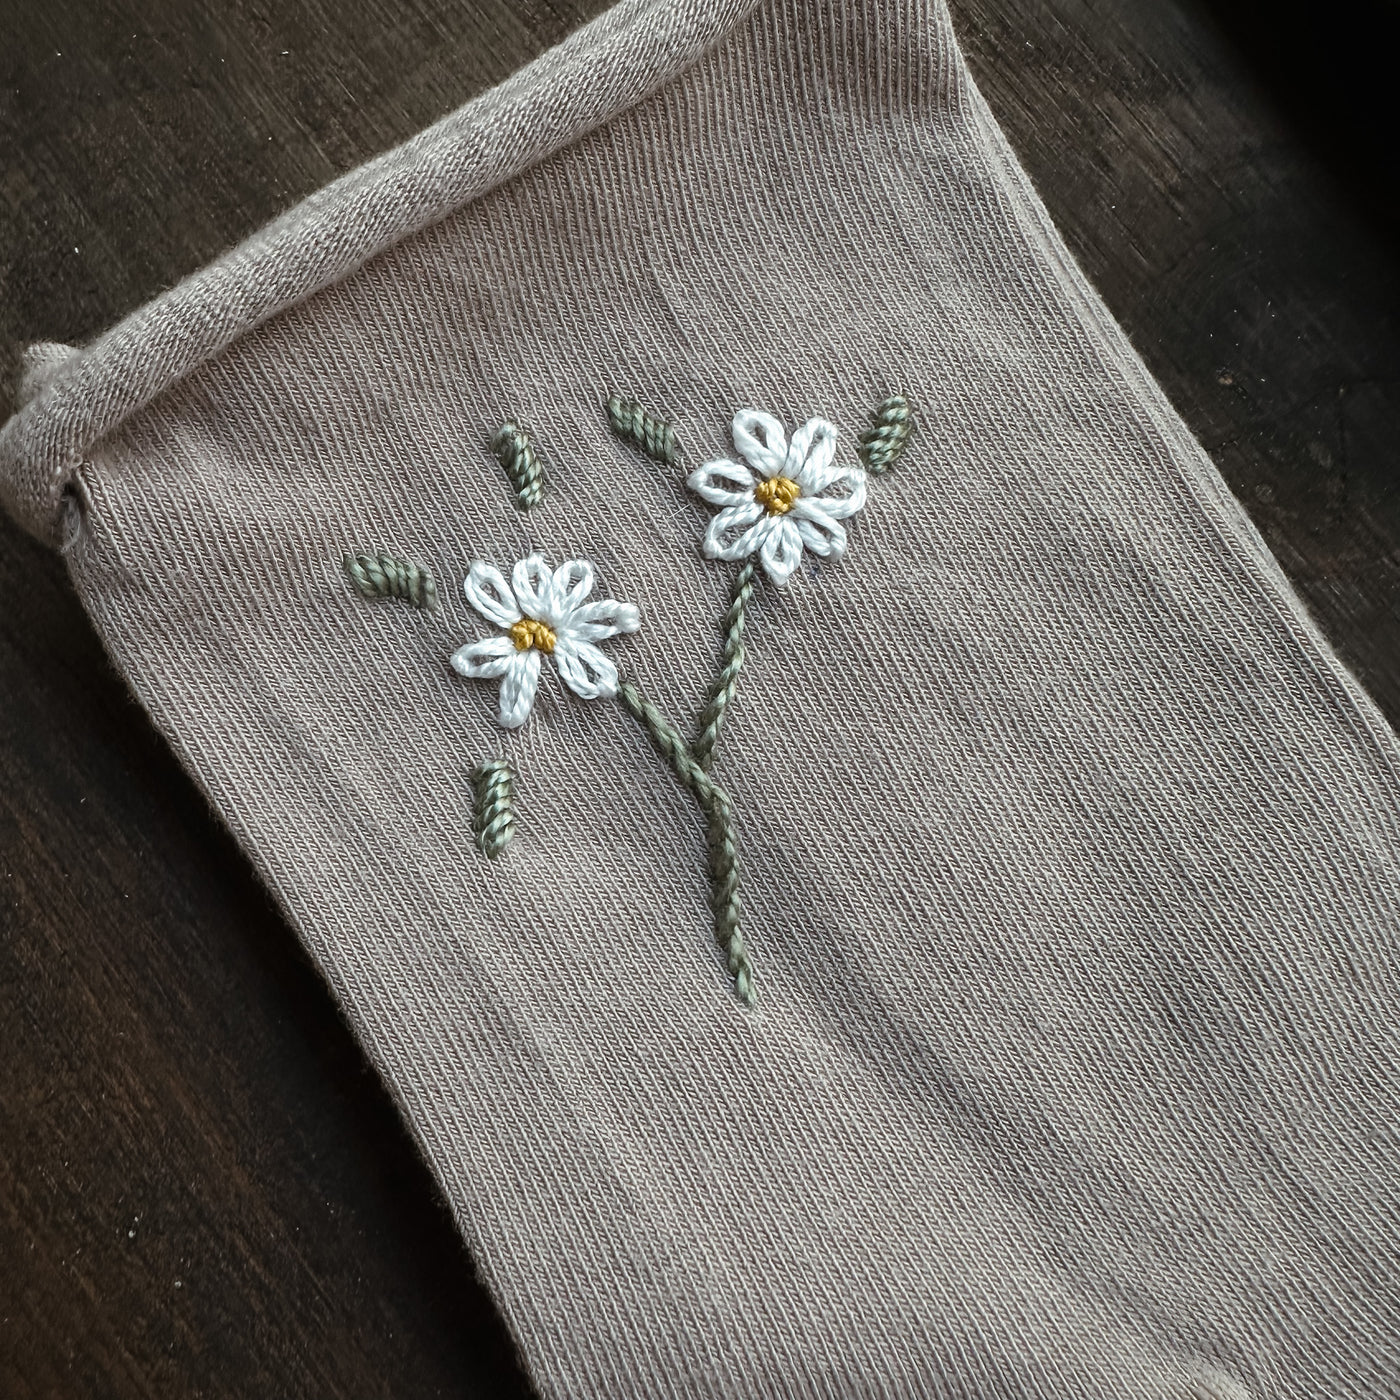 Hand Embroidered Socks